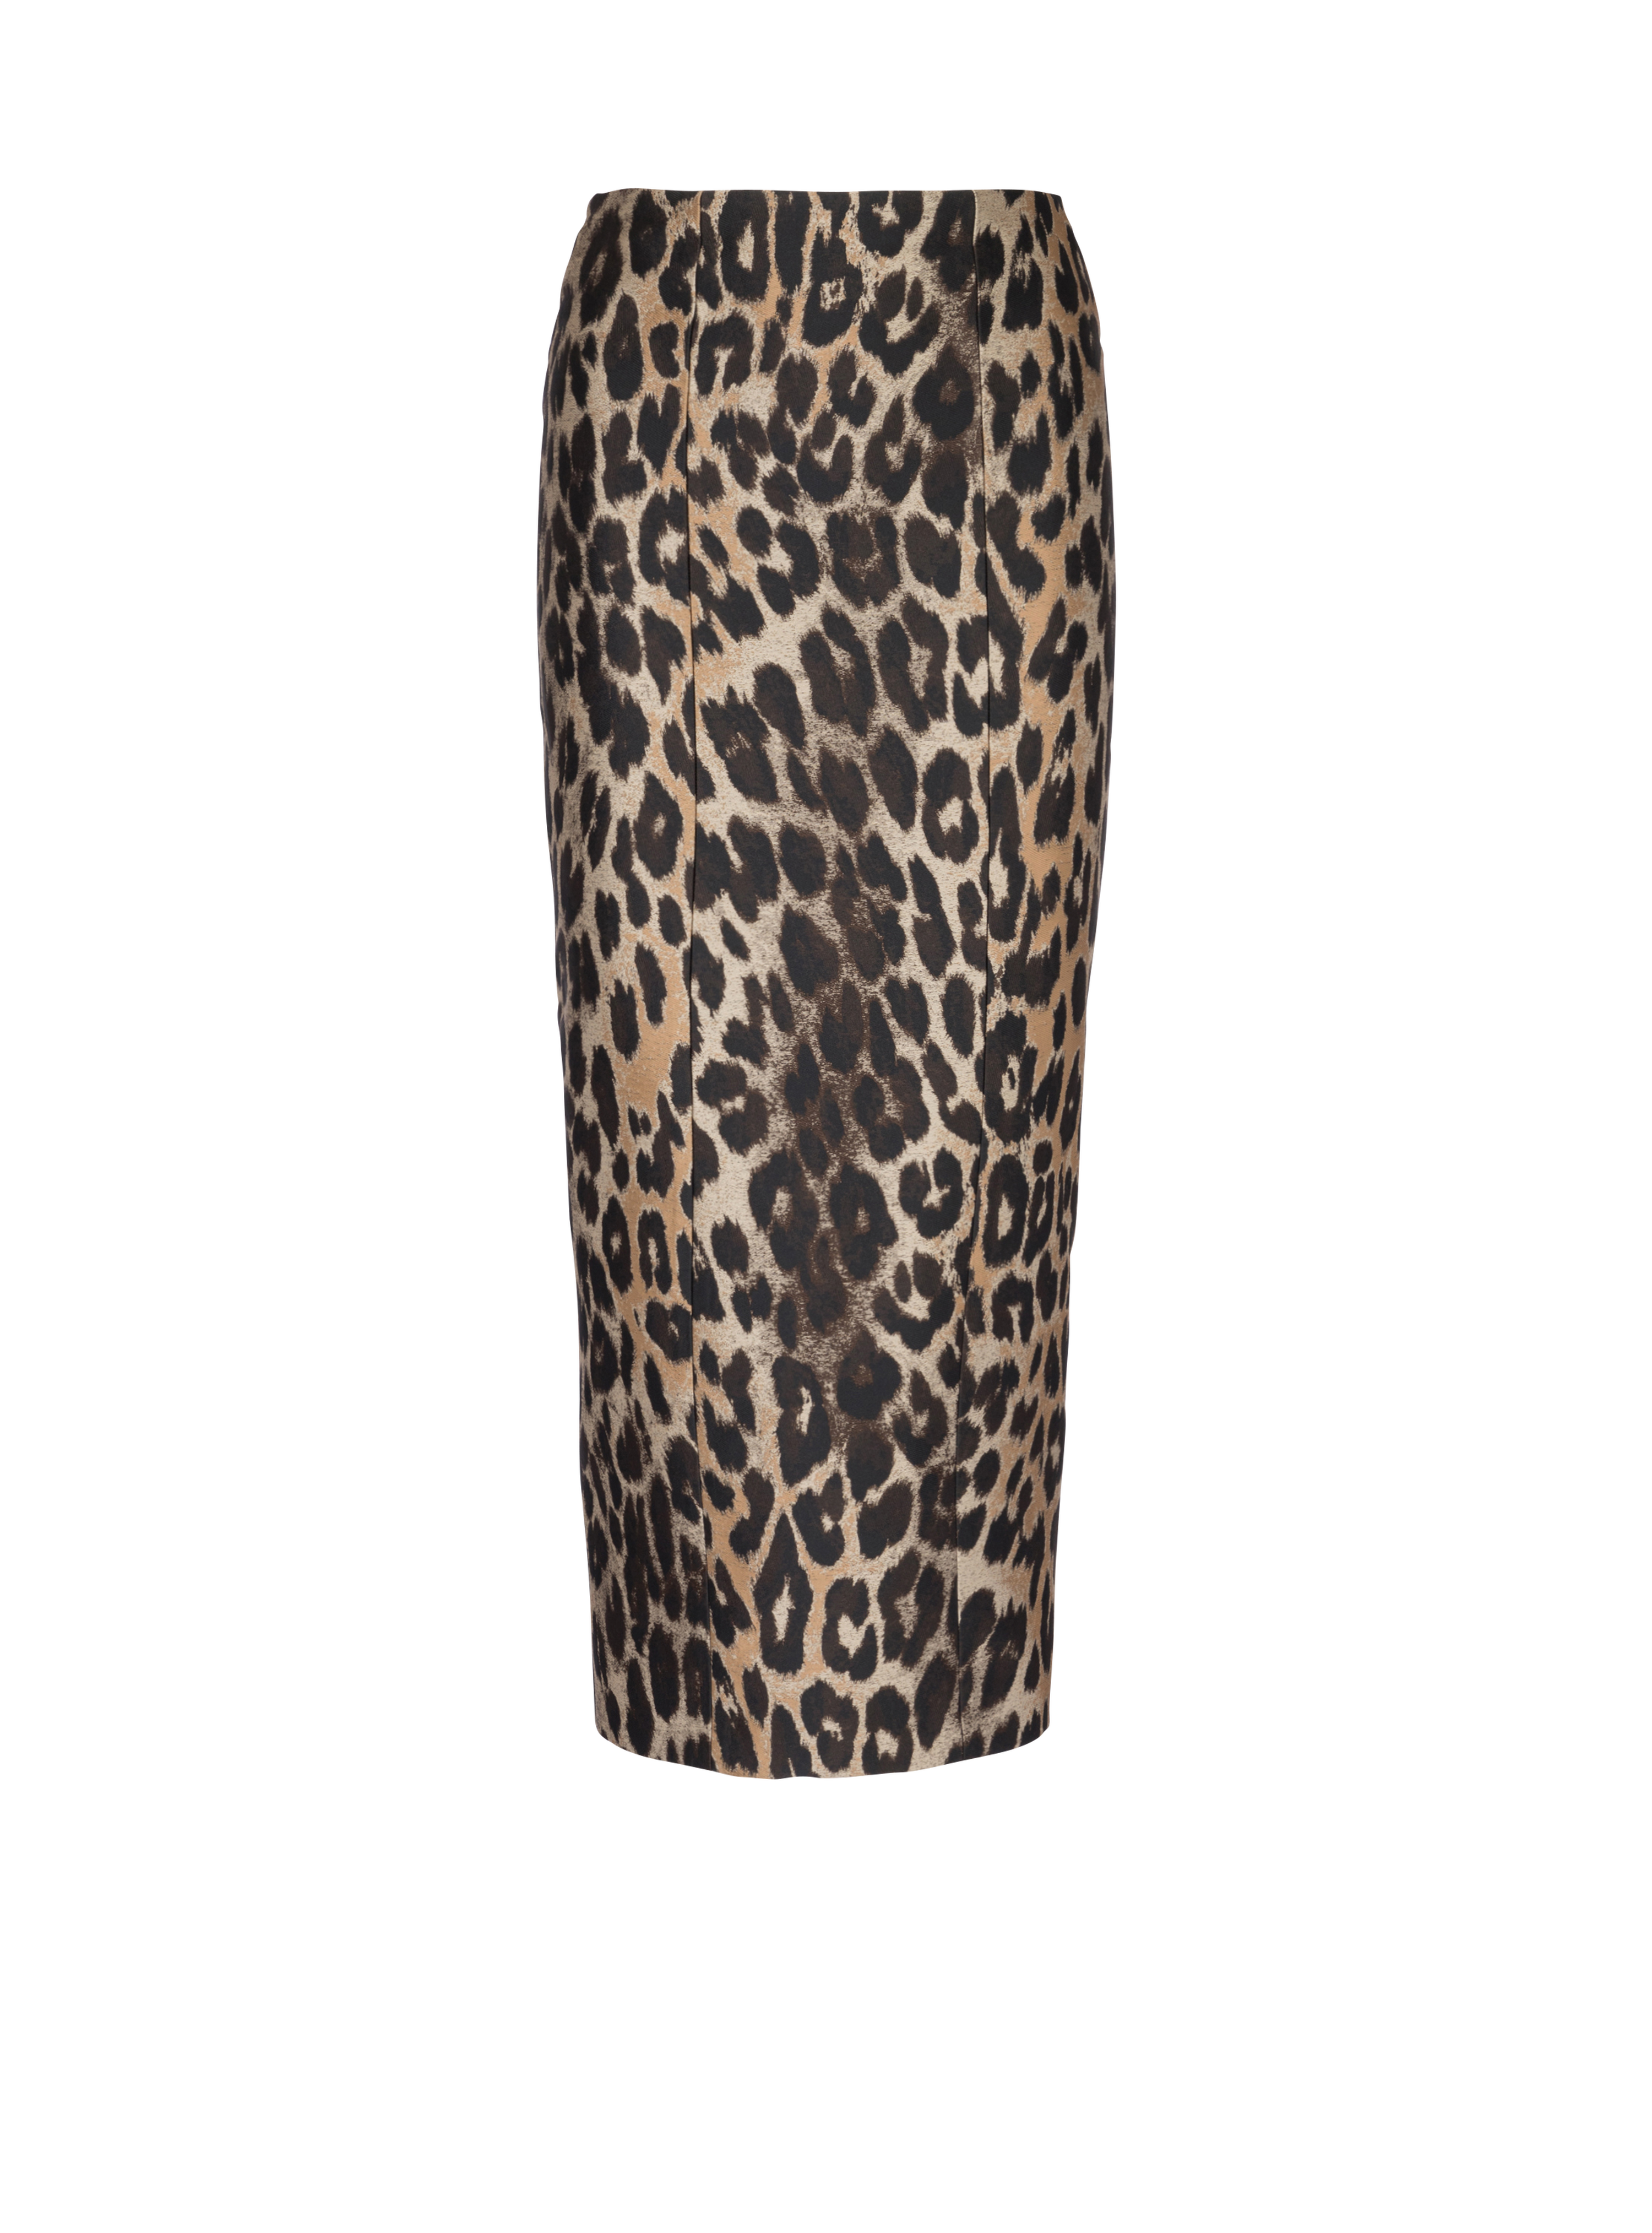 Leopard jacquard pencil skirt, brown